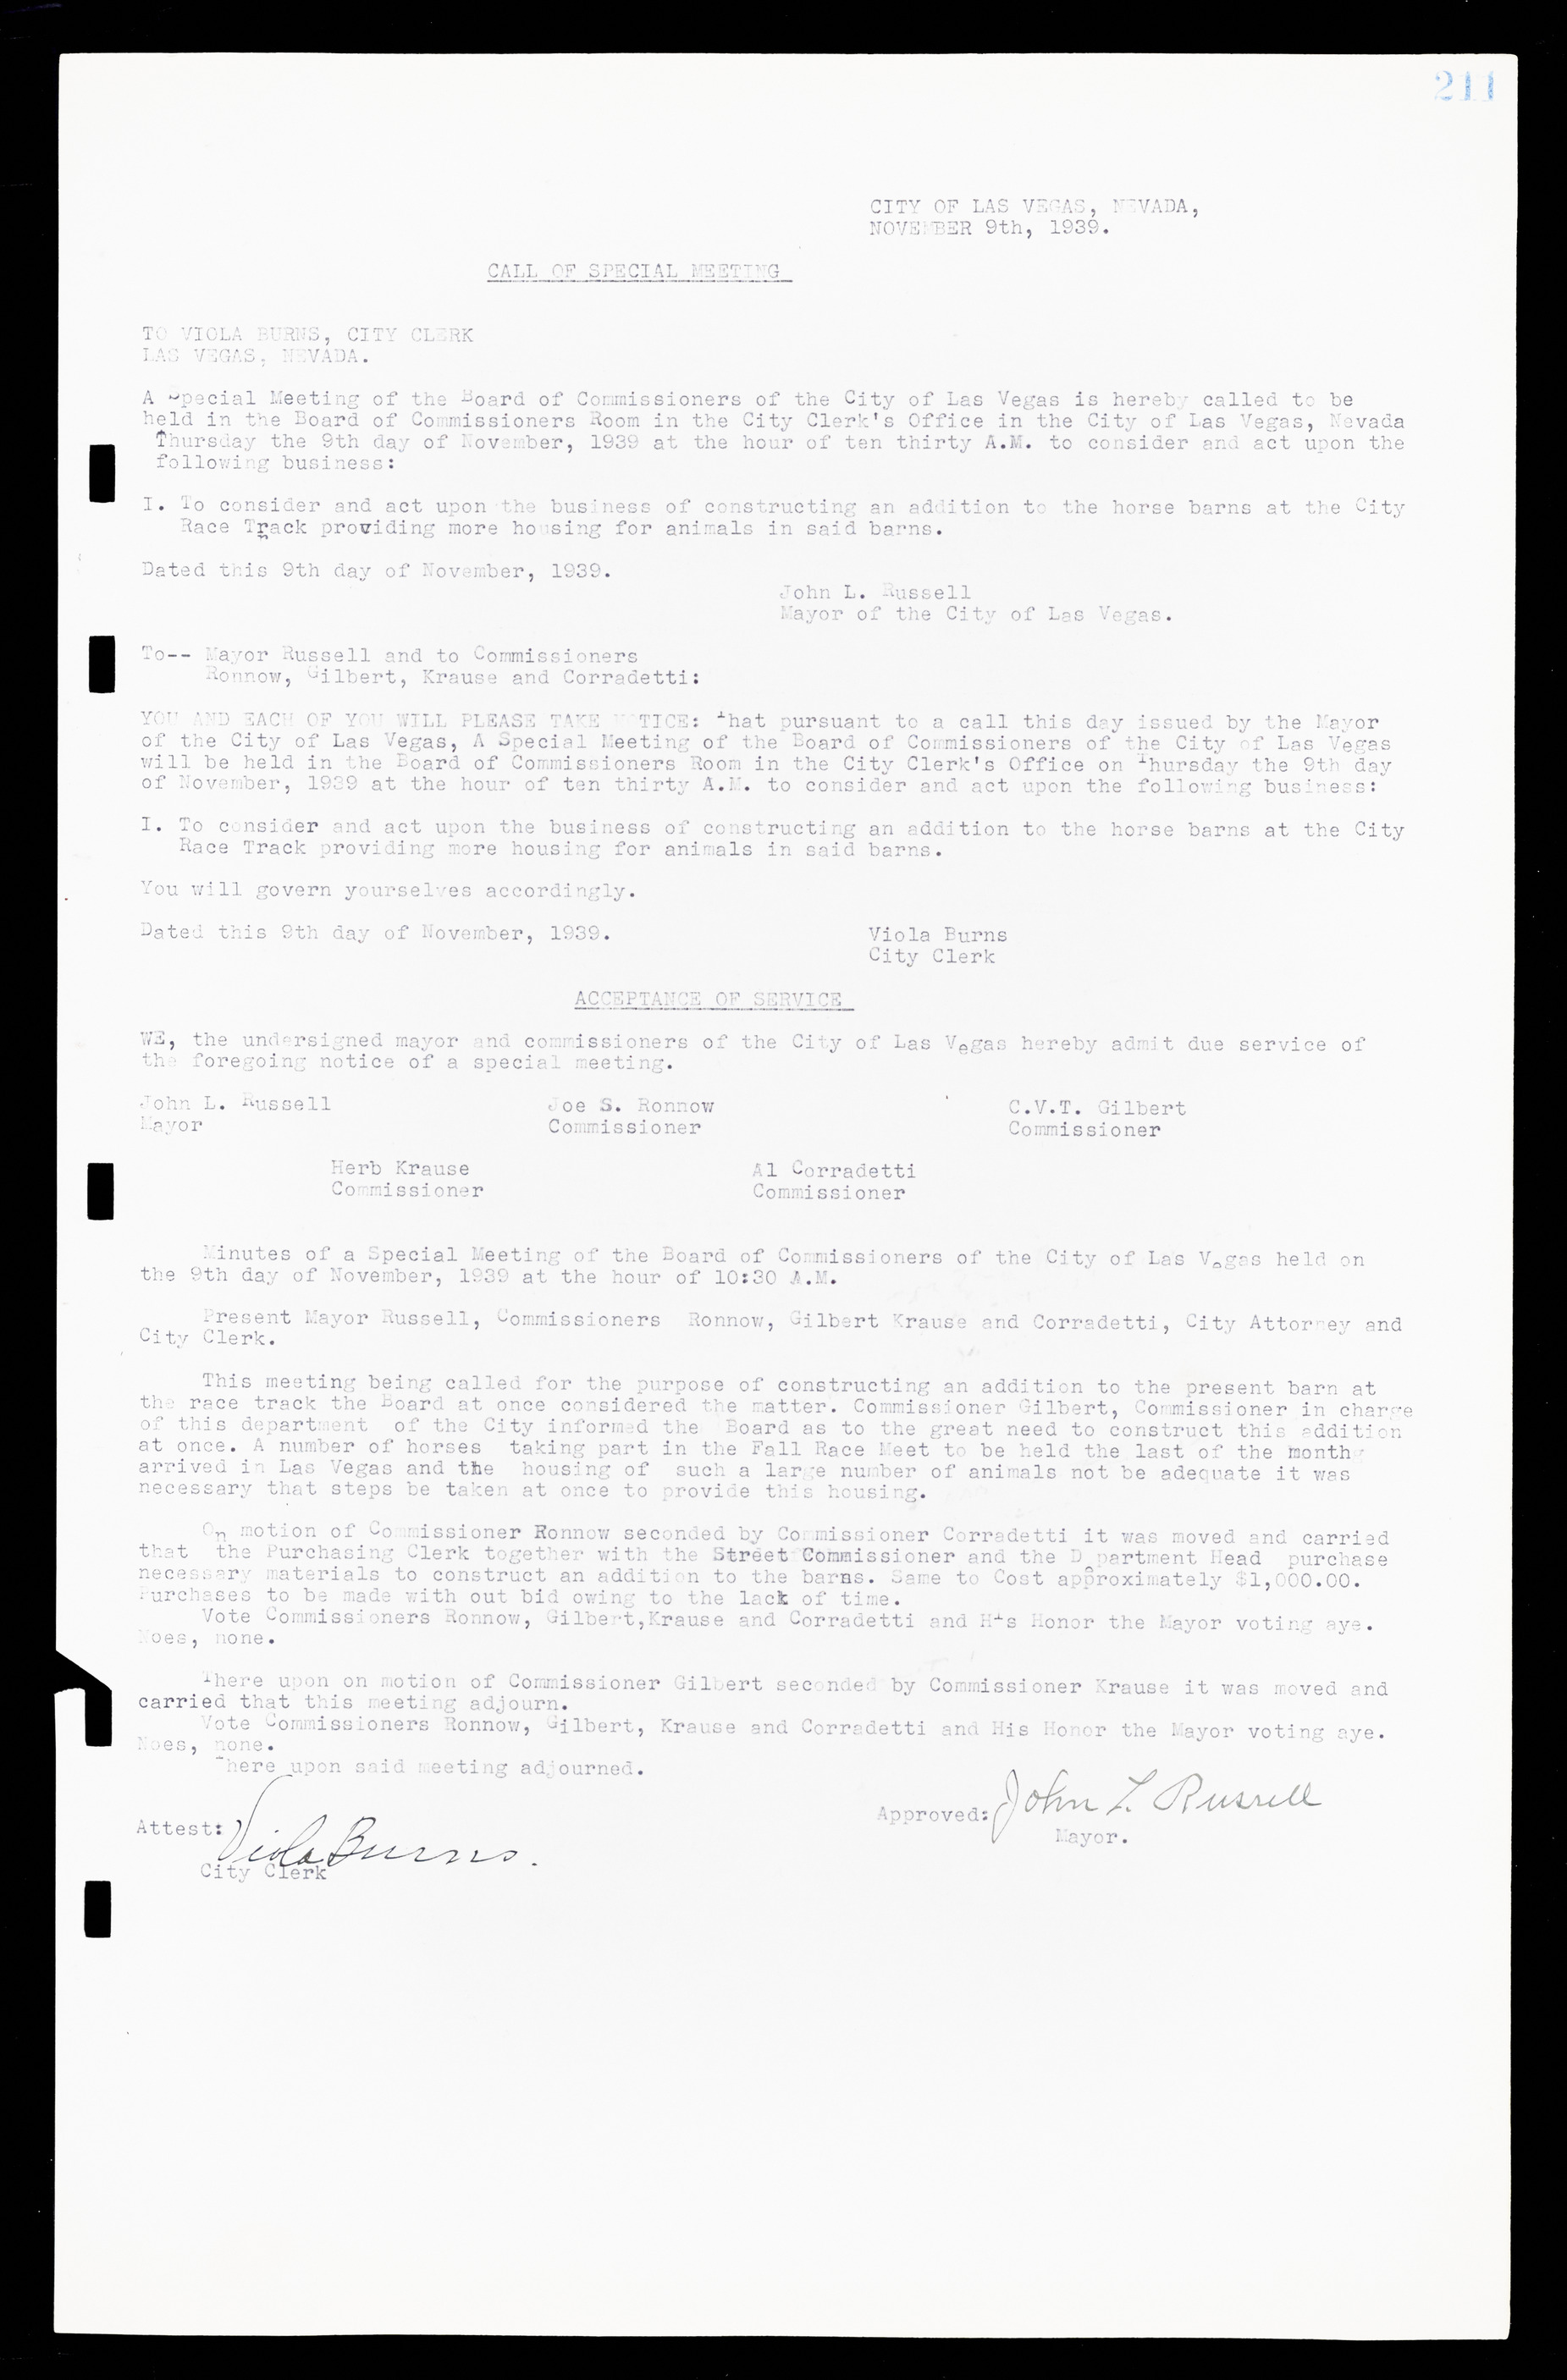 Las Vegas City Commission Minutes, February 17, 1937 to August 4, 1942, lvc000004-229